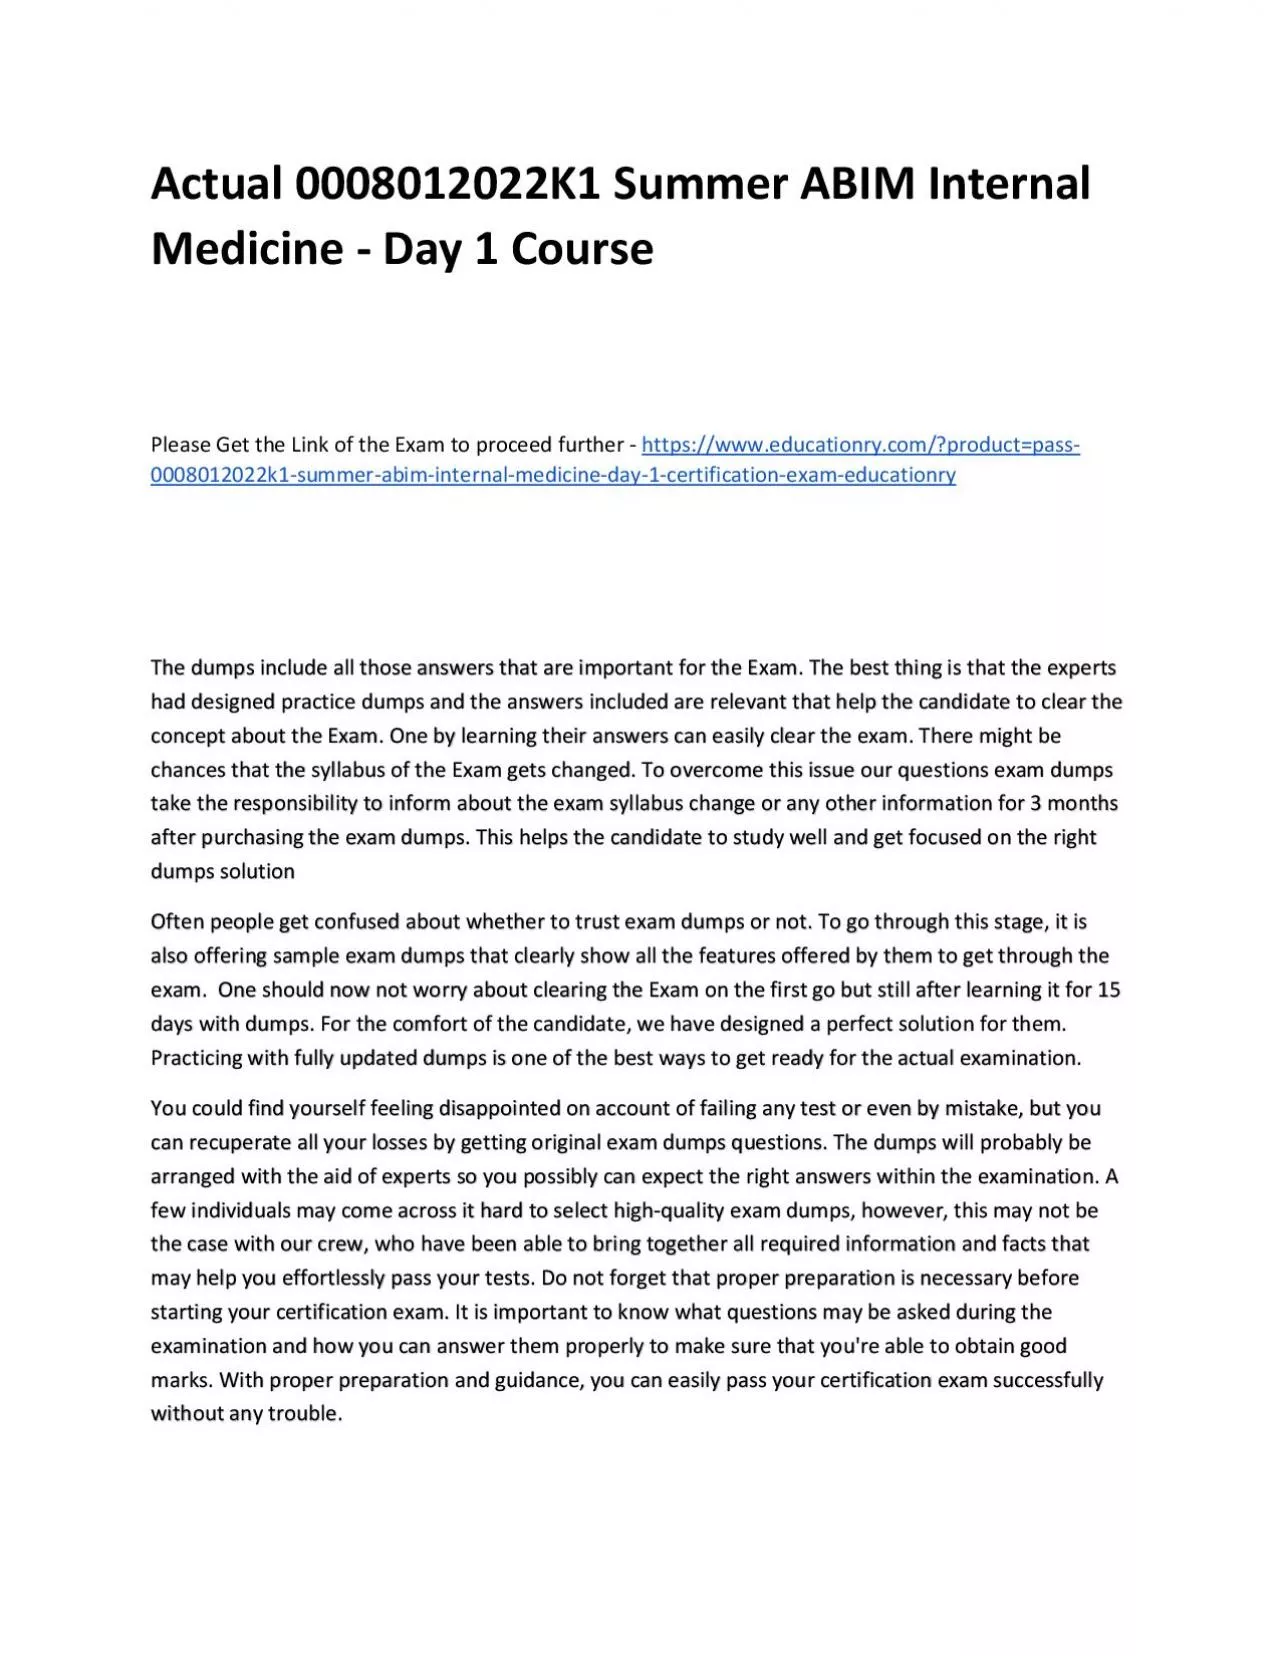 Actual 0008012022K1 Summer ABIM Internal Medicine - Day 1 Practice Course